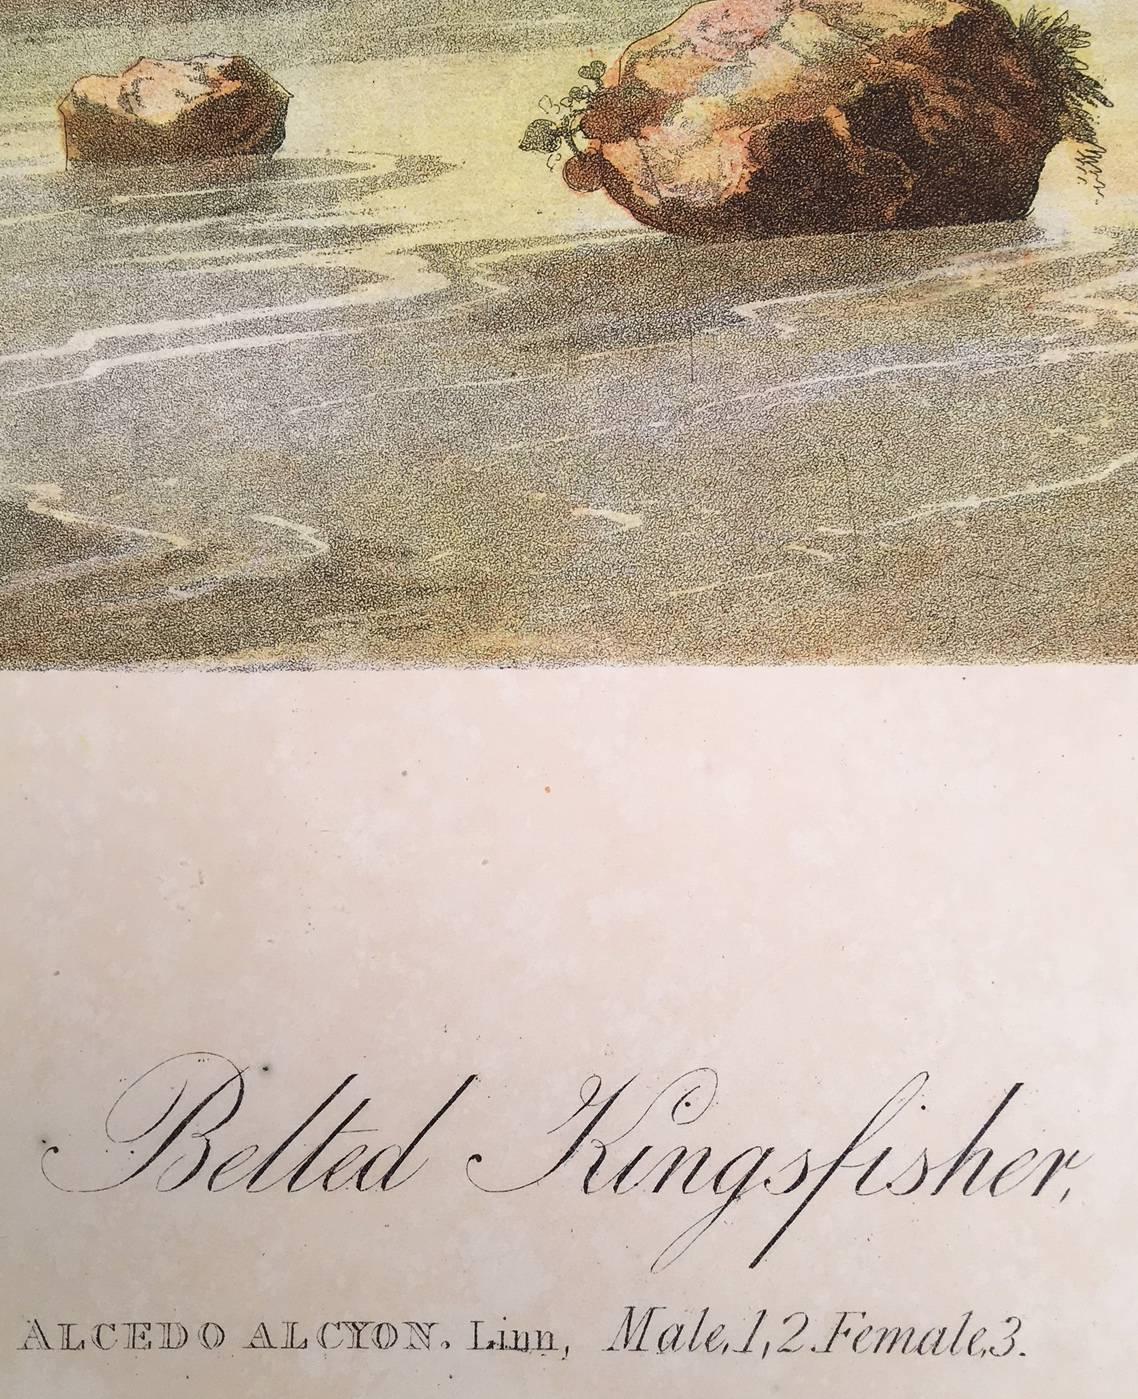 Belted Kingfisher - Naturalistic Print by John James Audubon